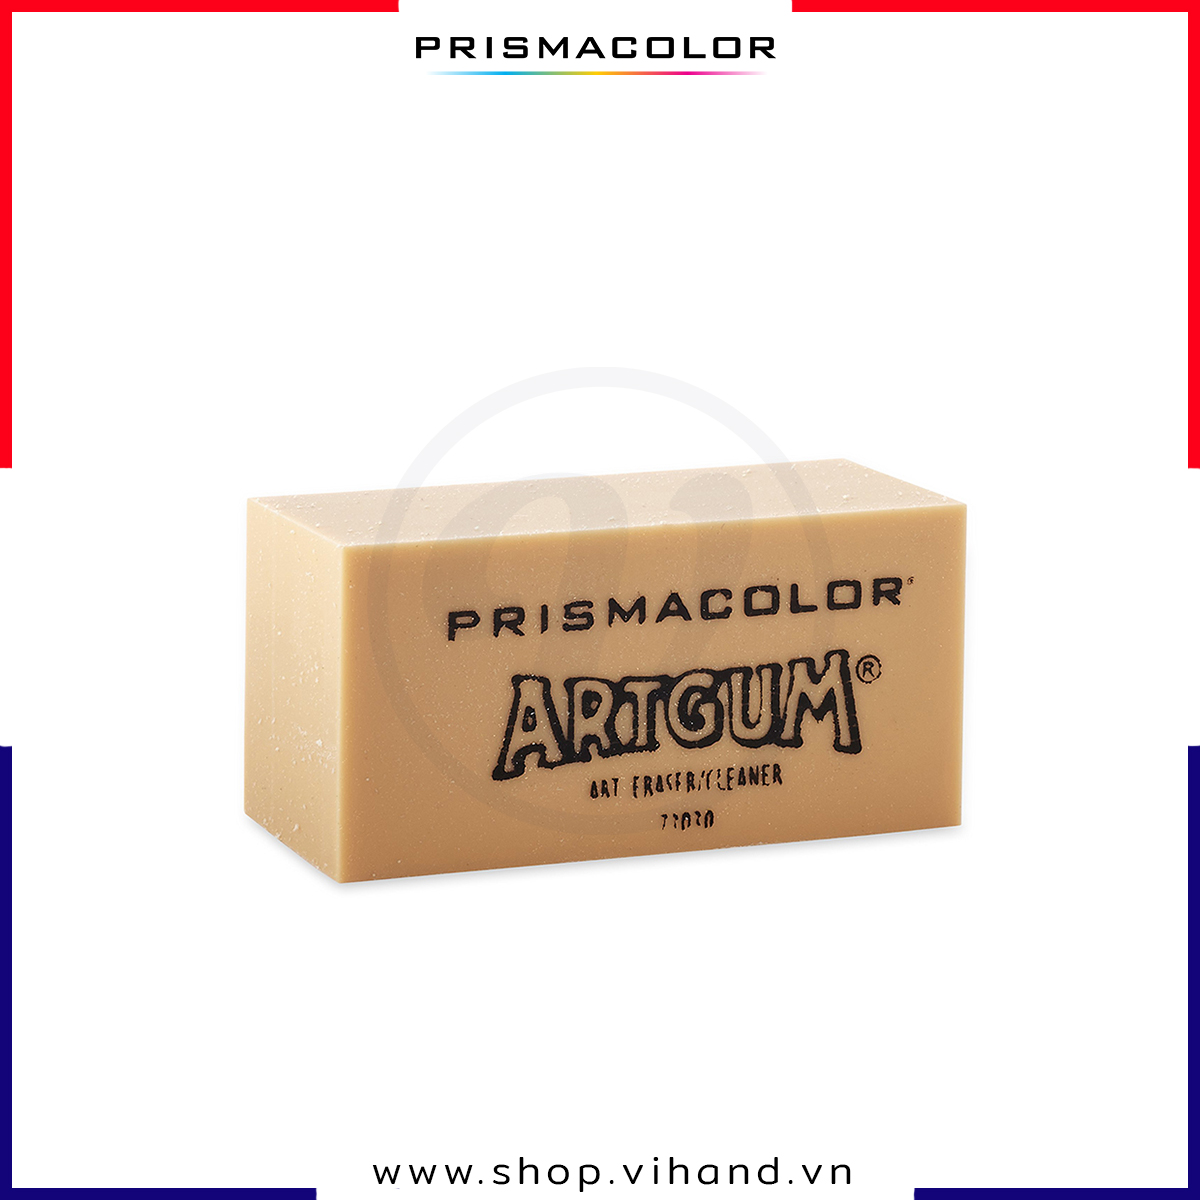 Prismacolor Artgum Erasers